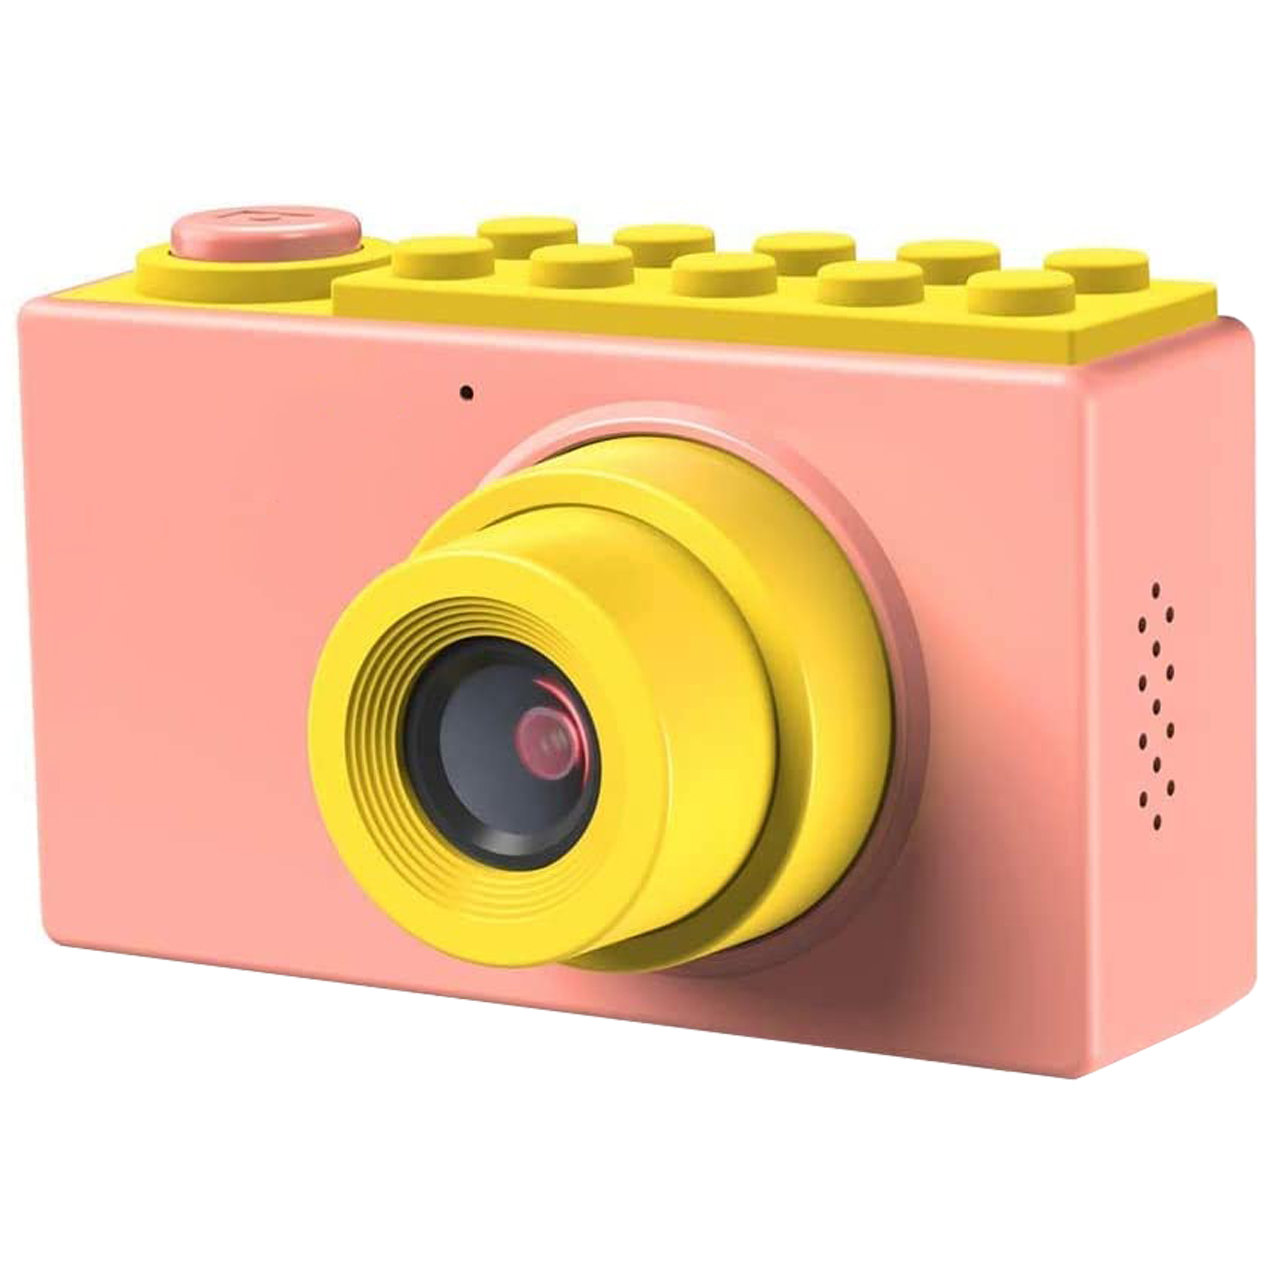  دوربین دیجیتال مدل AT006p